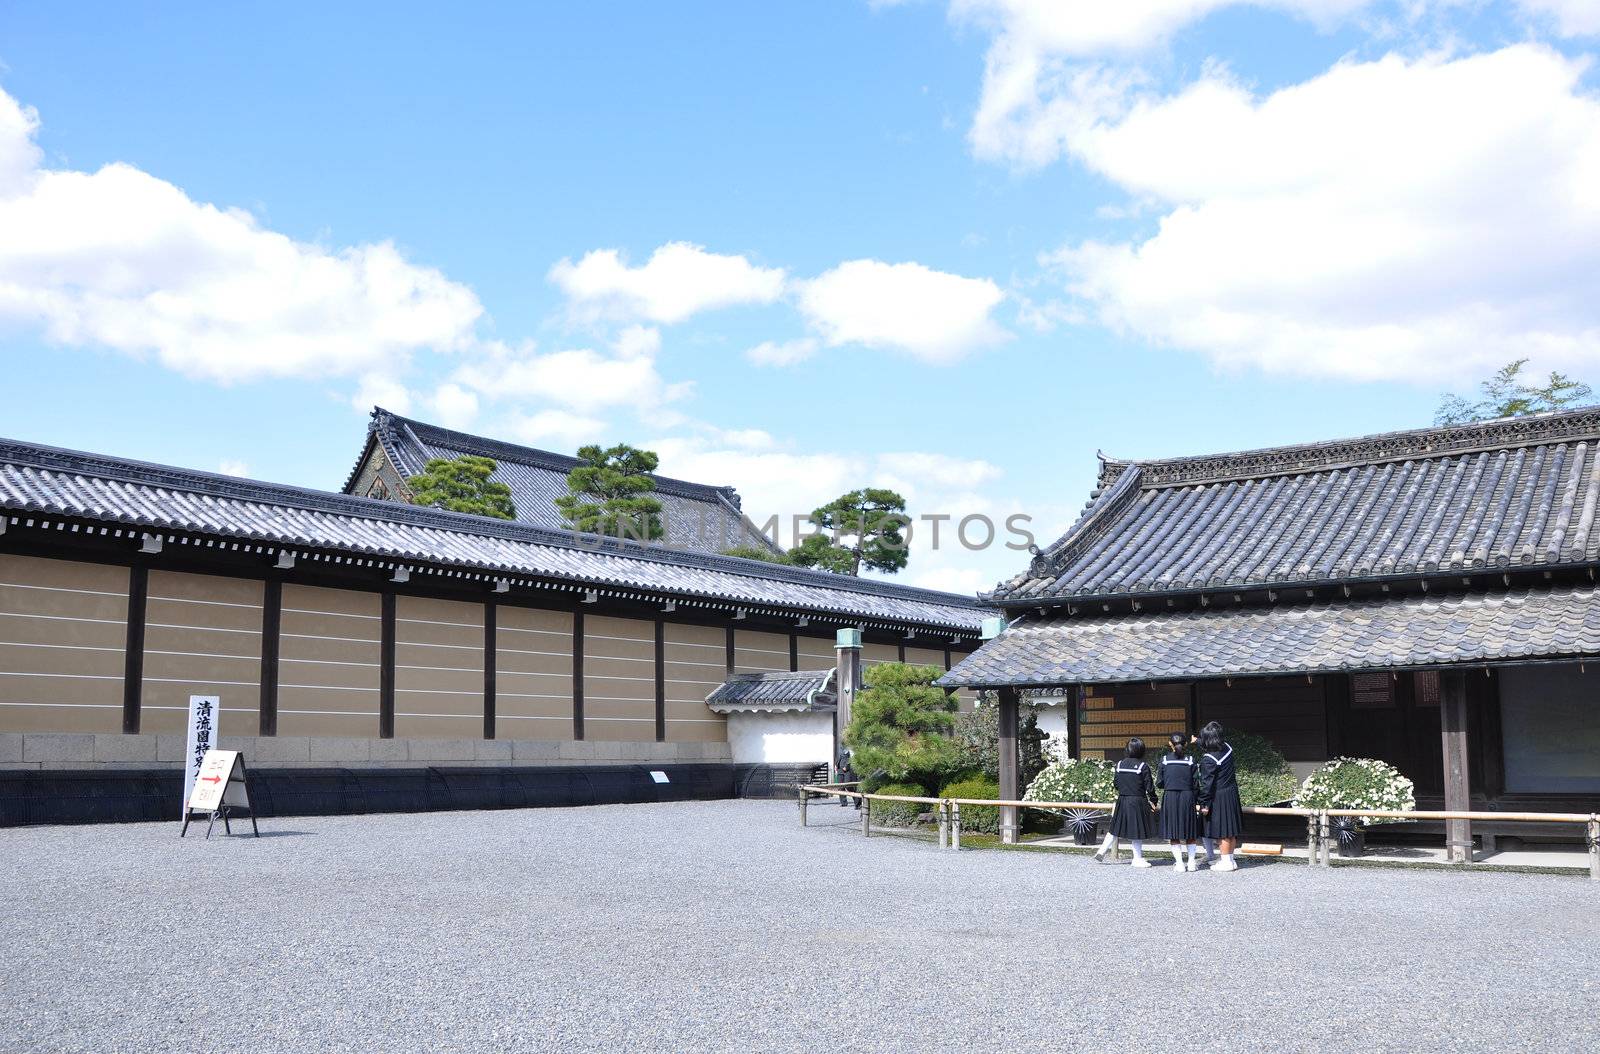 Ancient japanese architecture, Kyoto, Japan  by siraanamwong